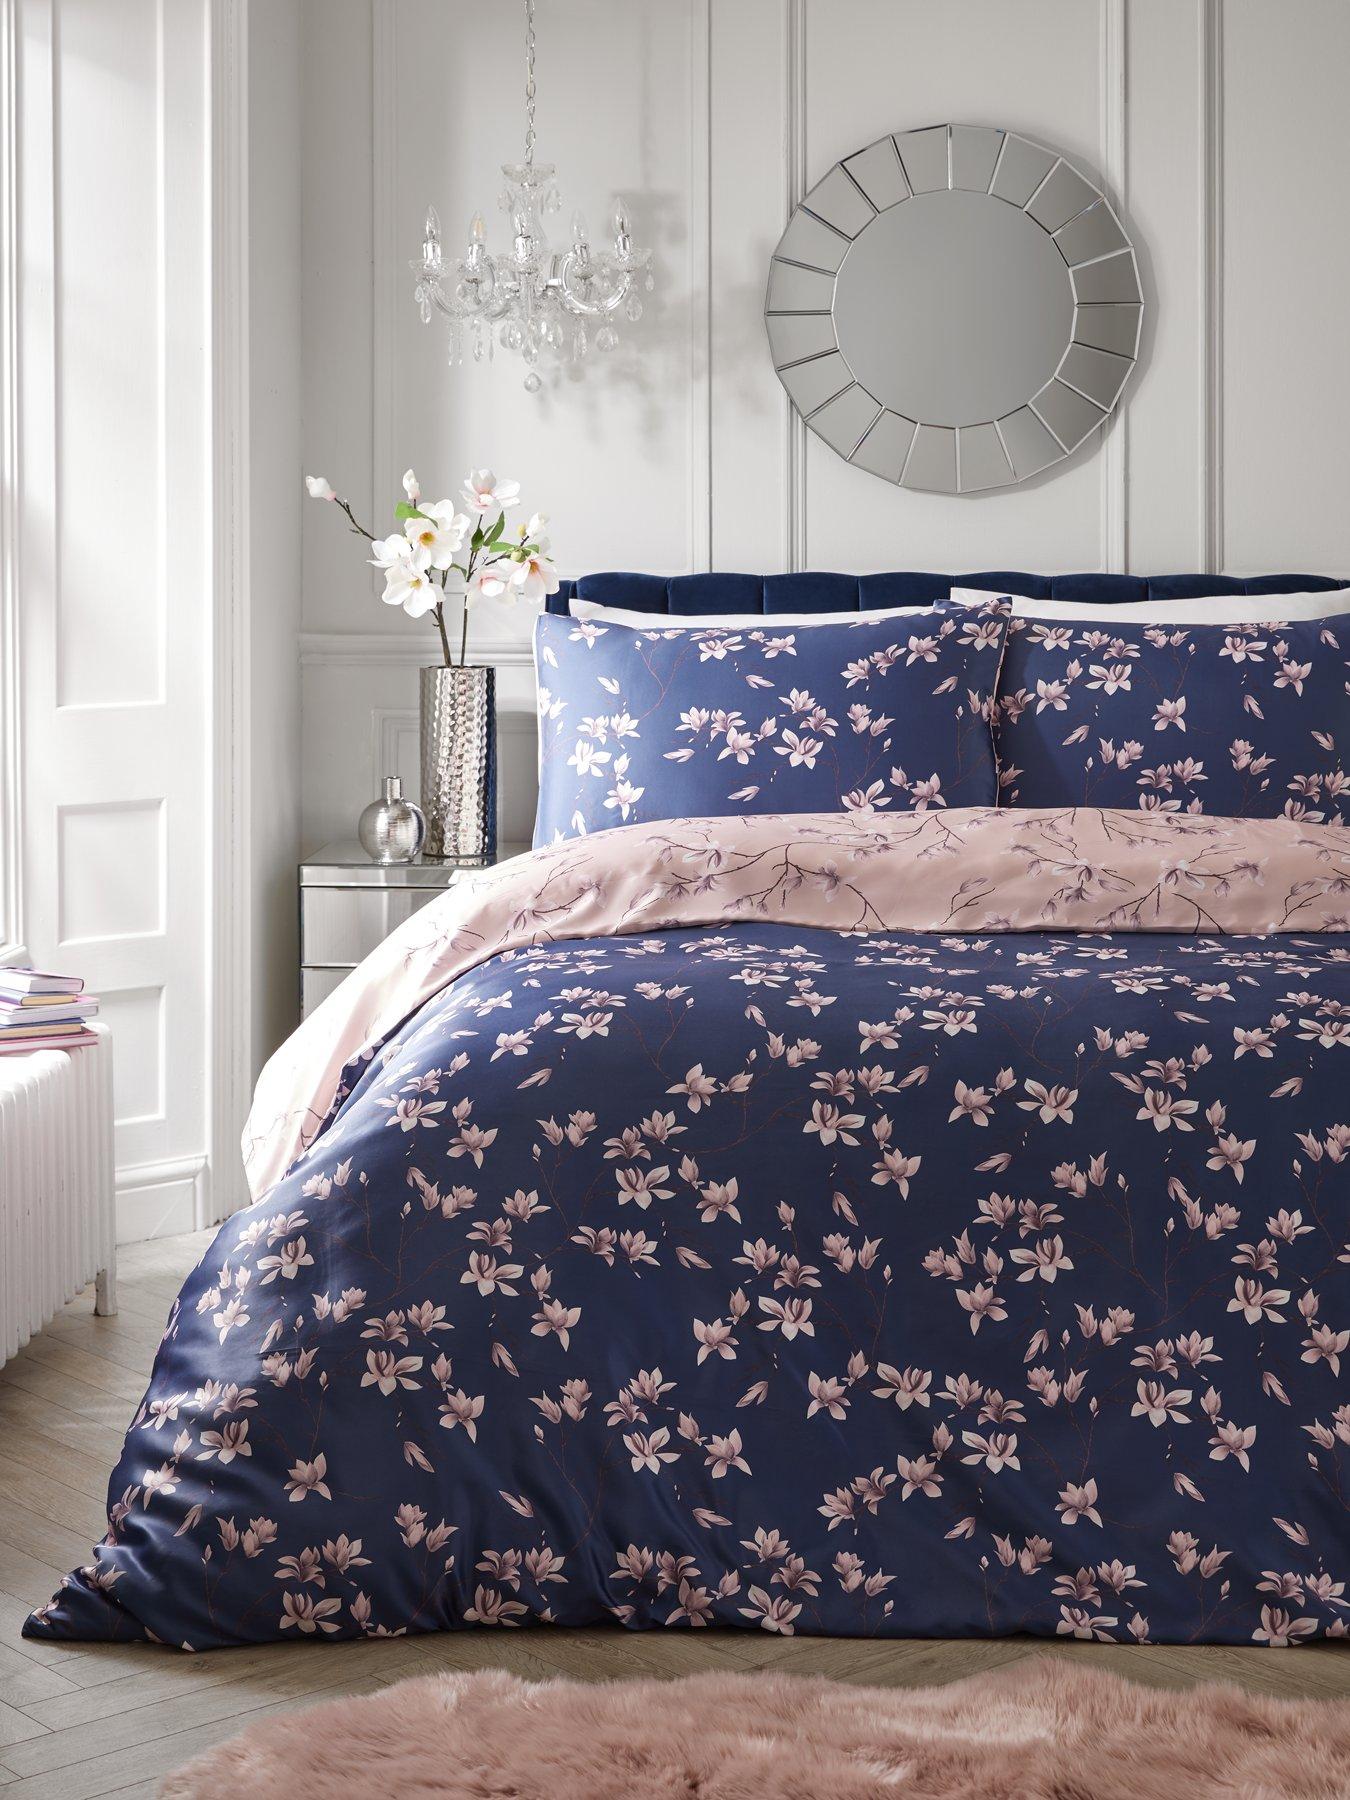 Toddler Bed Floral Duvet Cover 120x150cm.100% Cotton Handmade Girls Cotbed 